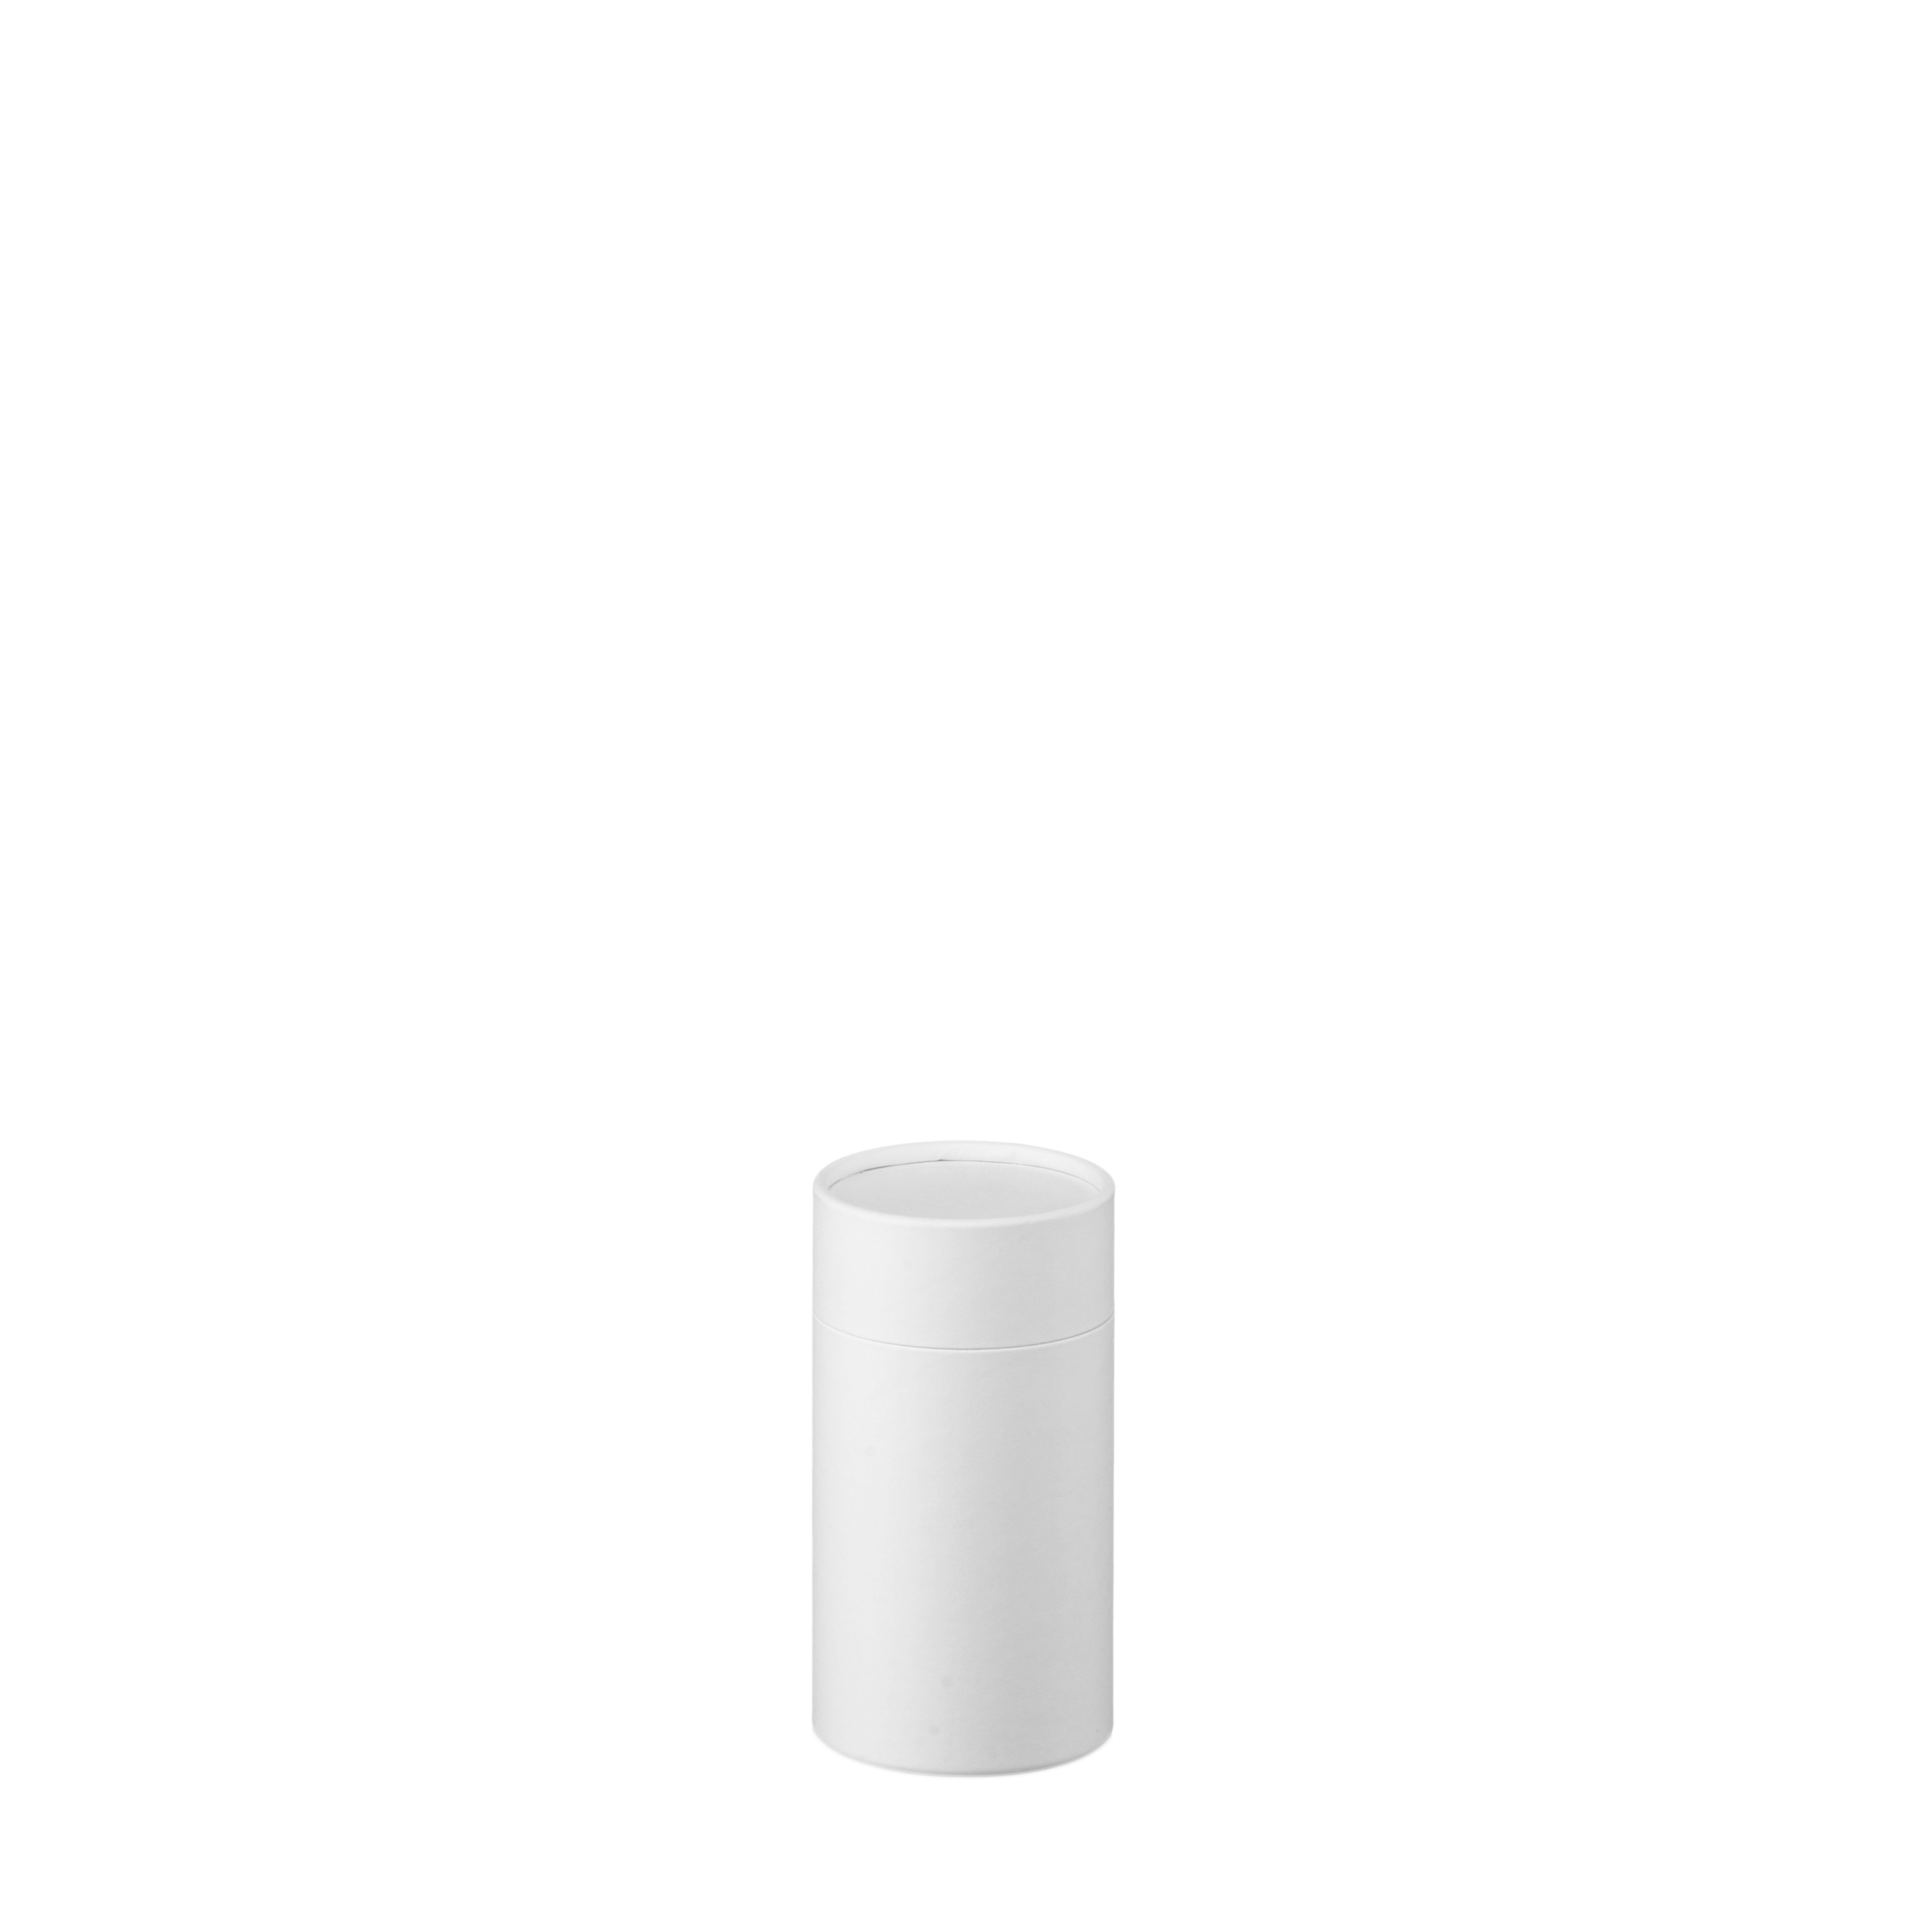 50 Pappdosen weiß | 120 x 66 mm I food grade